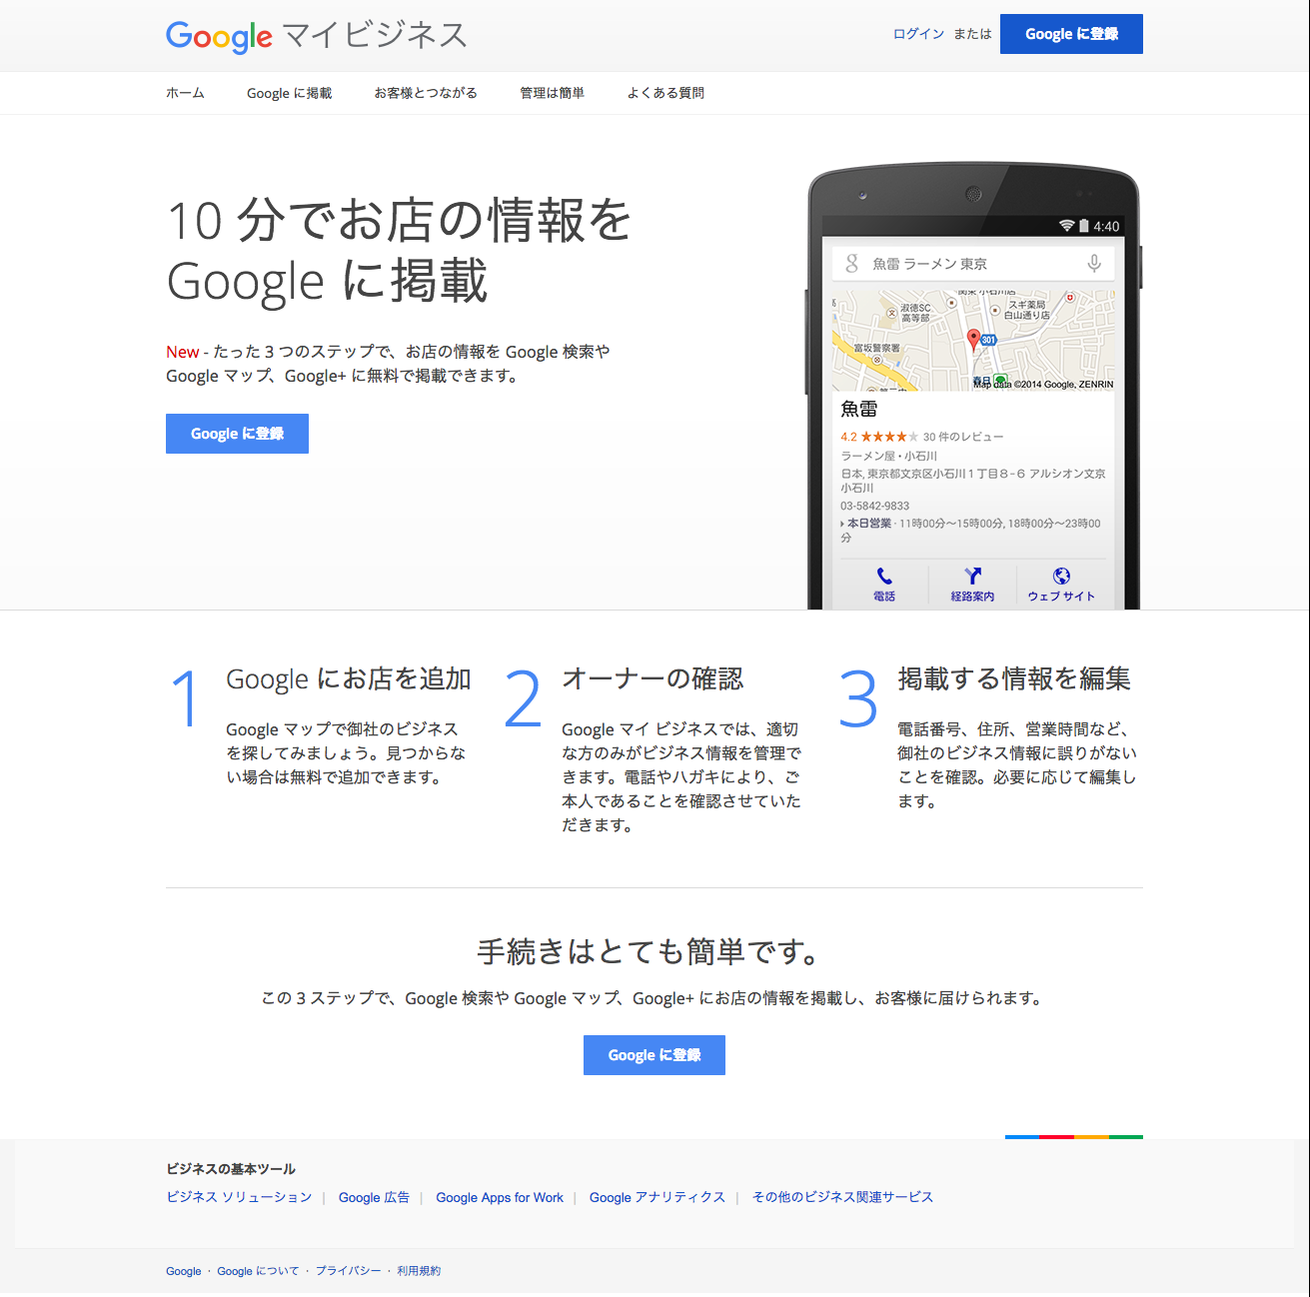 FireShot Capture 007 - Google マイビジネス - https___www.google.co.jp_business_get-started.html